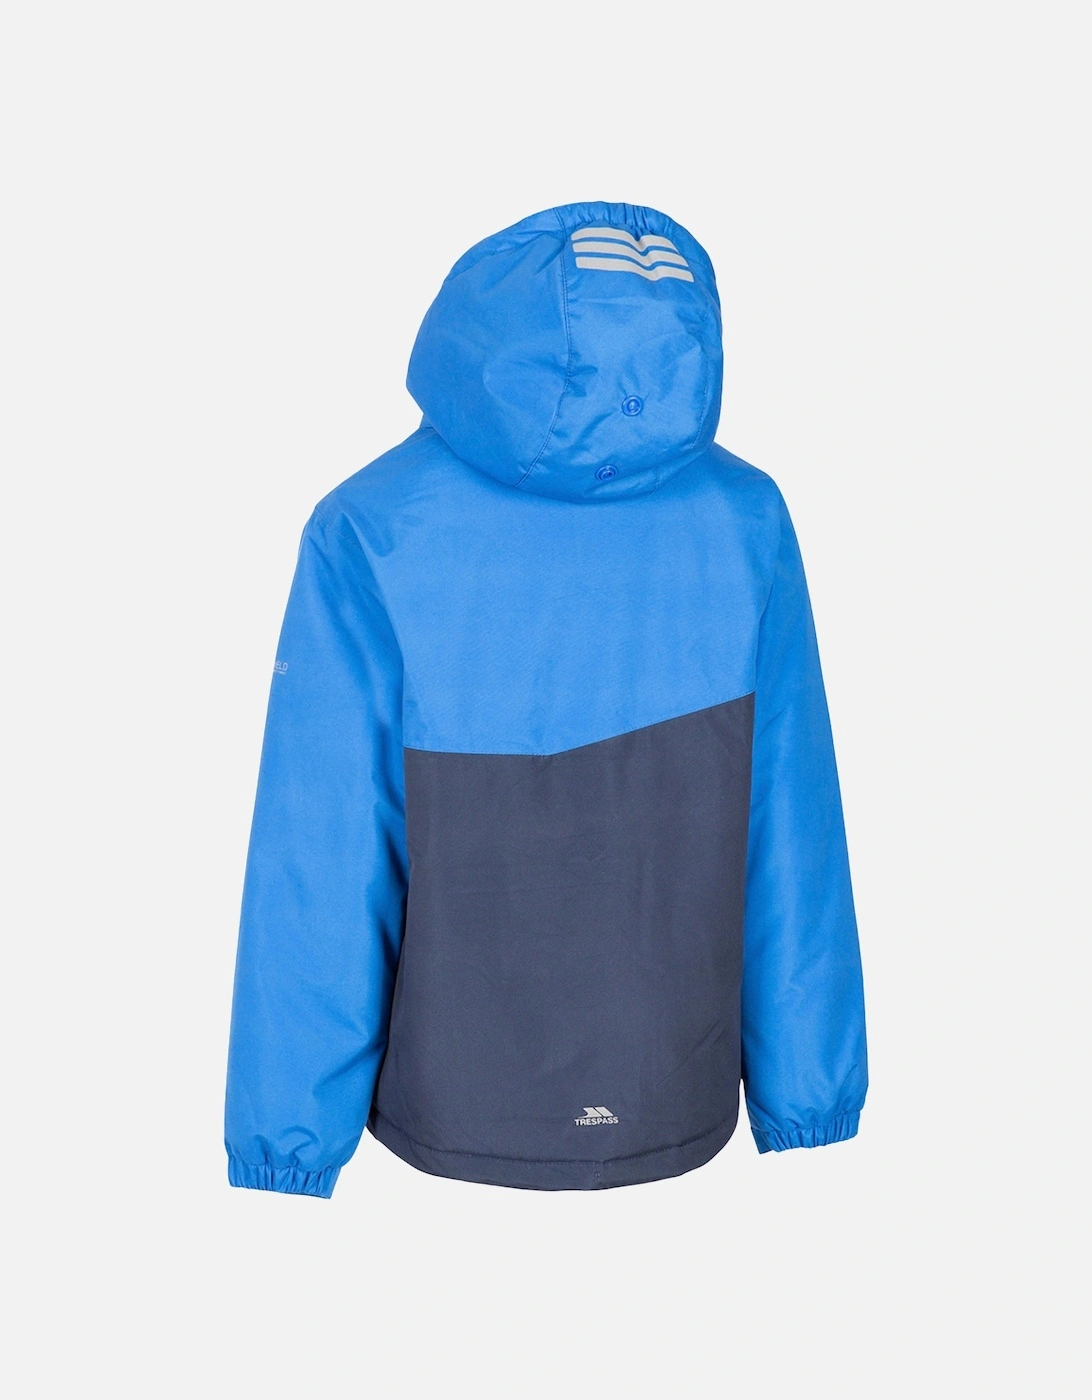 Childrens/Kids Smash TP50 Waterproof Jacket